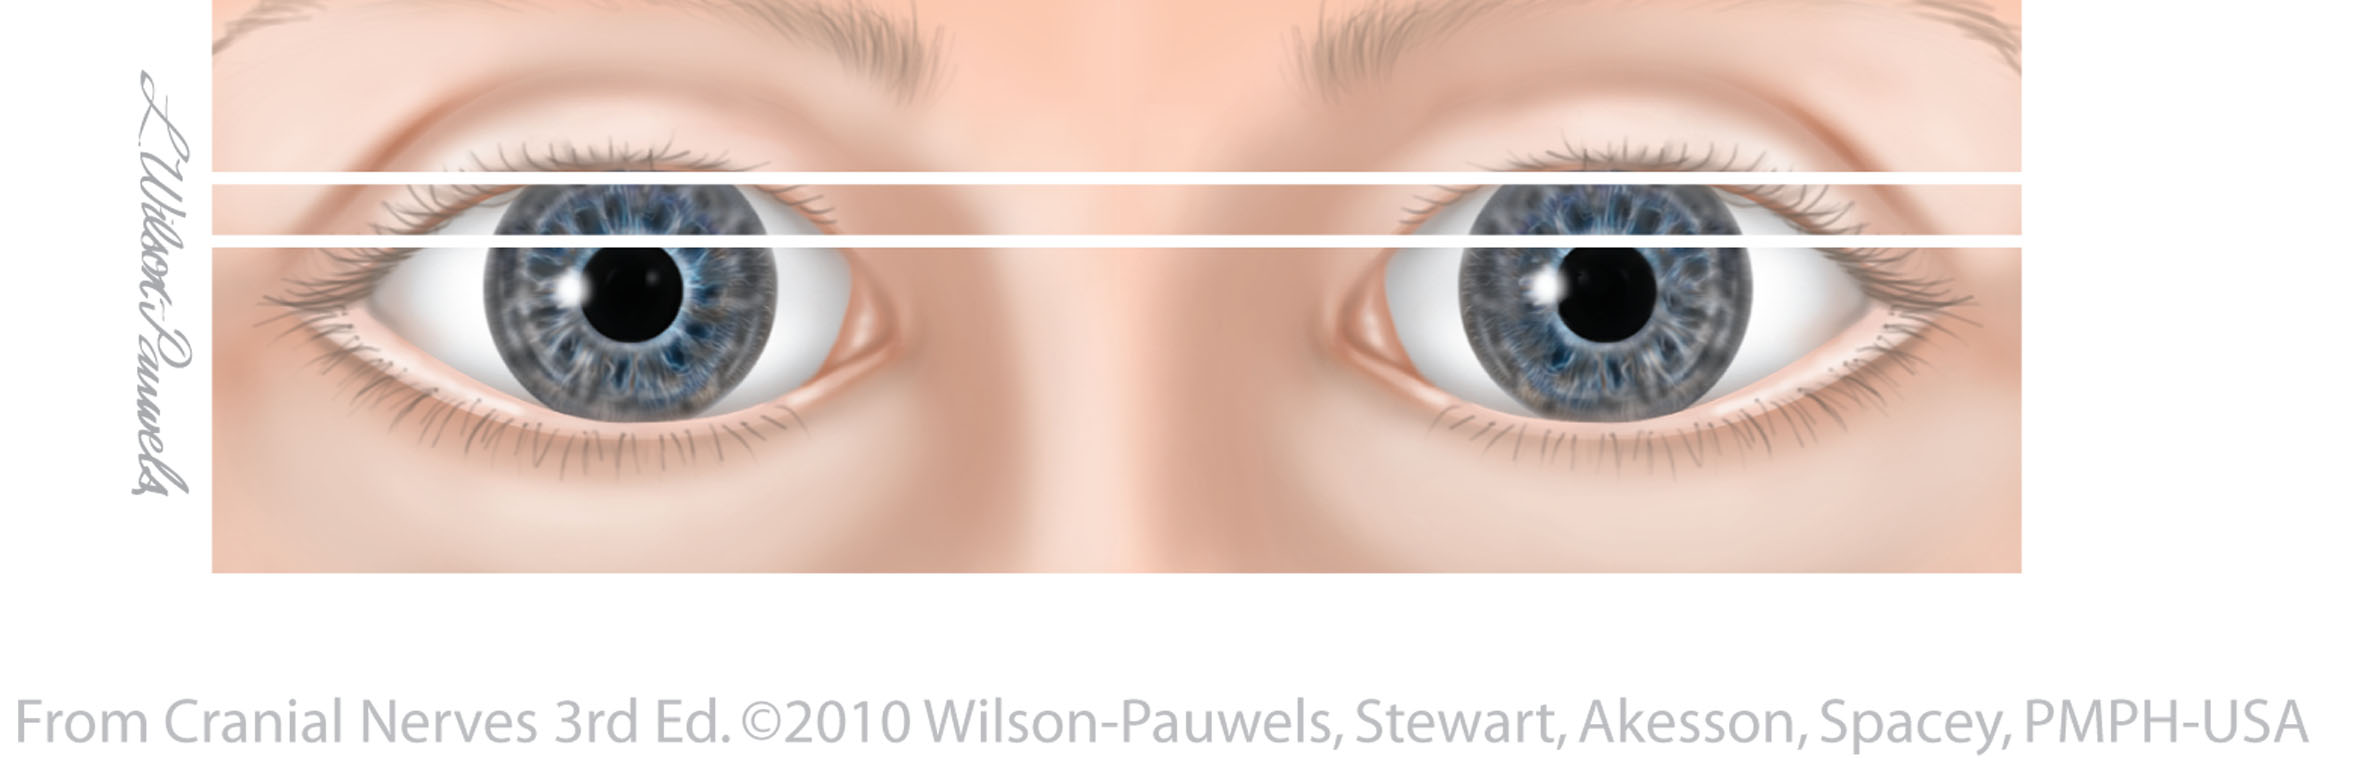 miotic pupil oculomotor